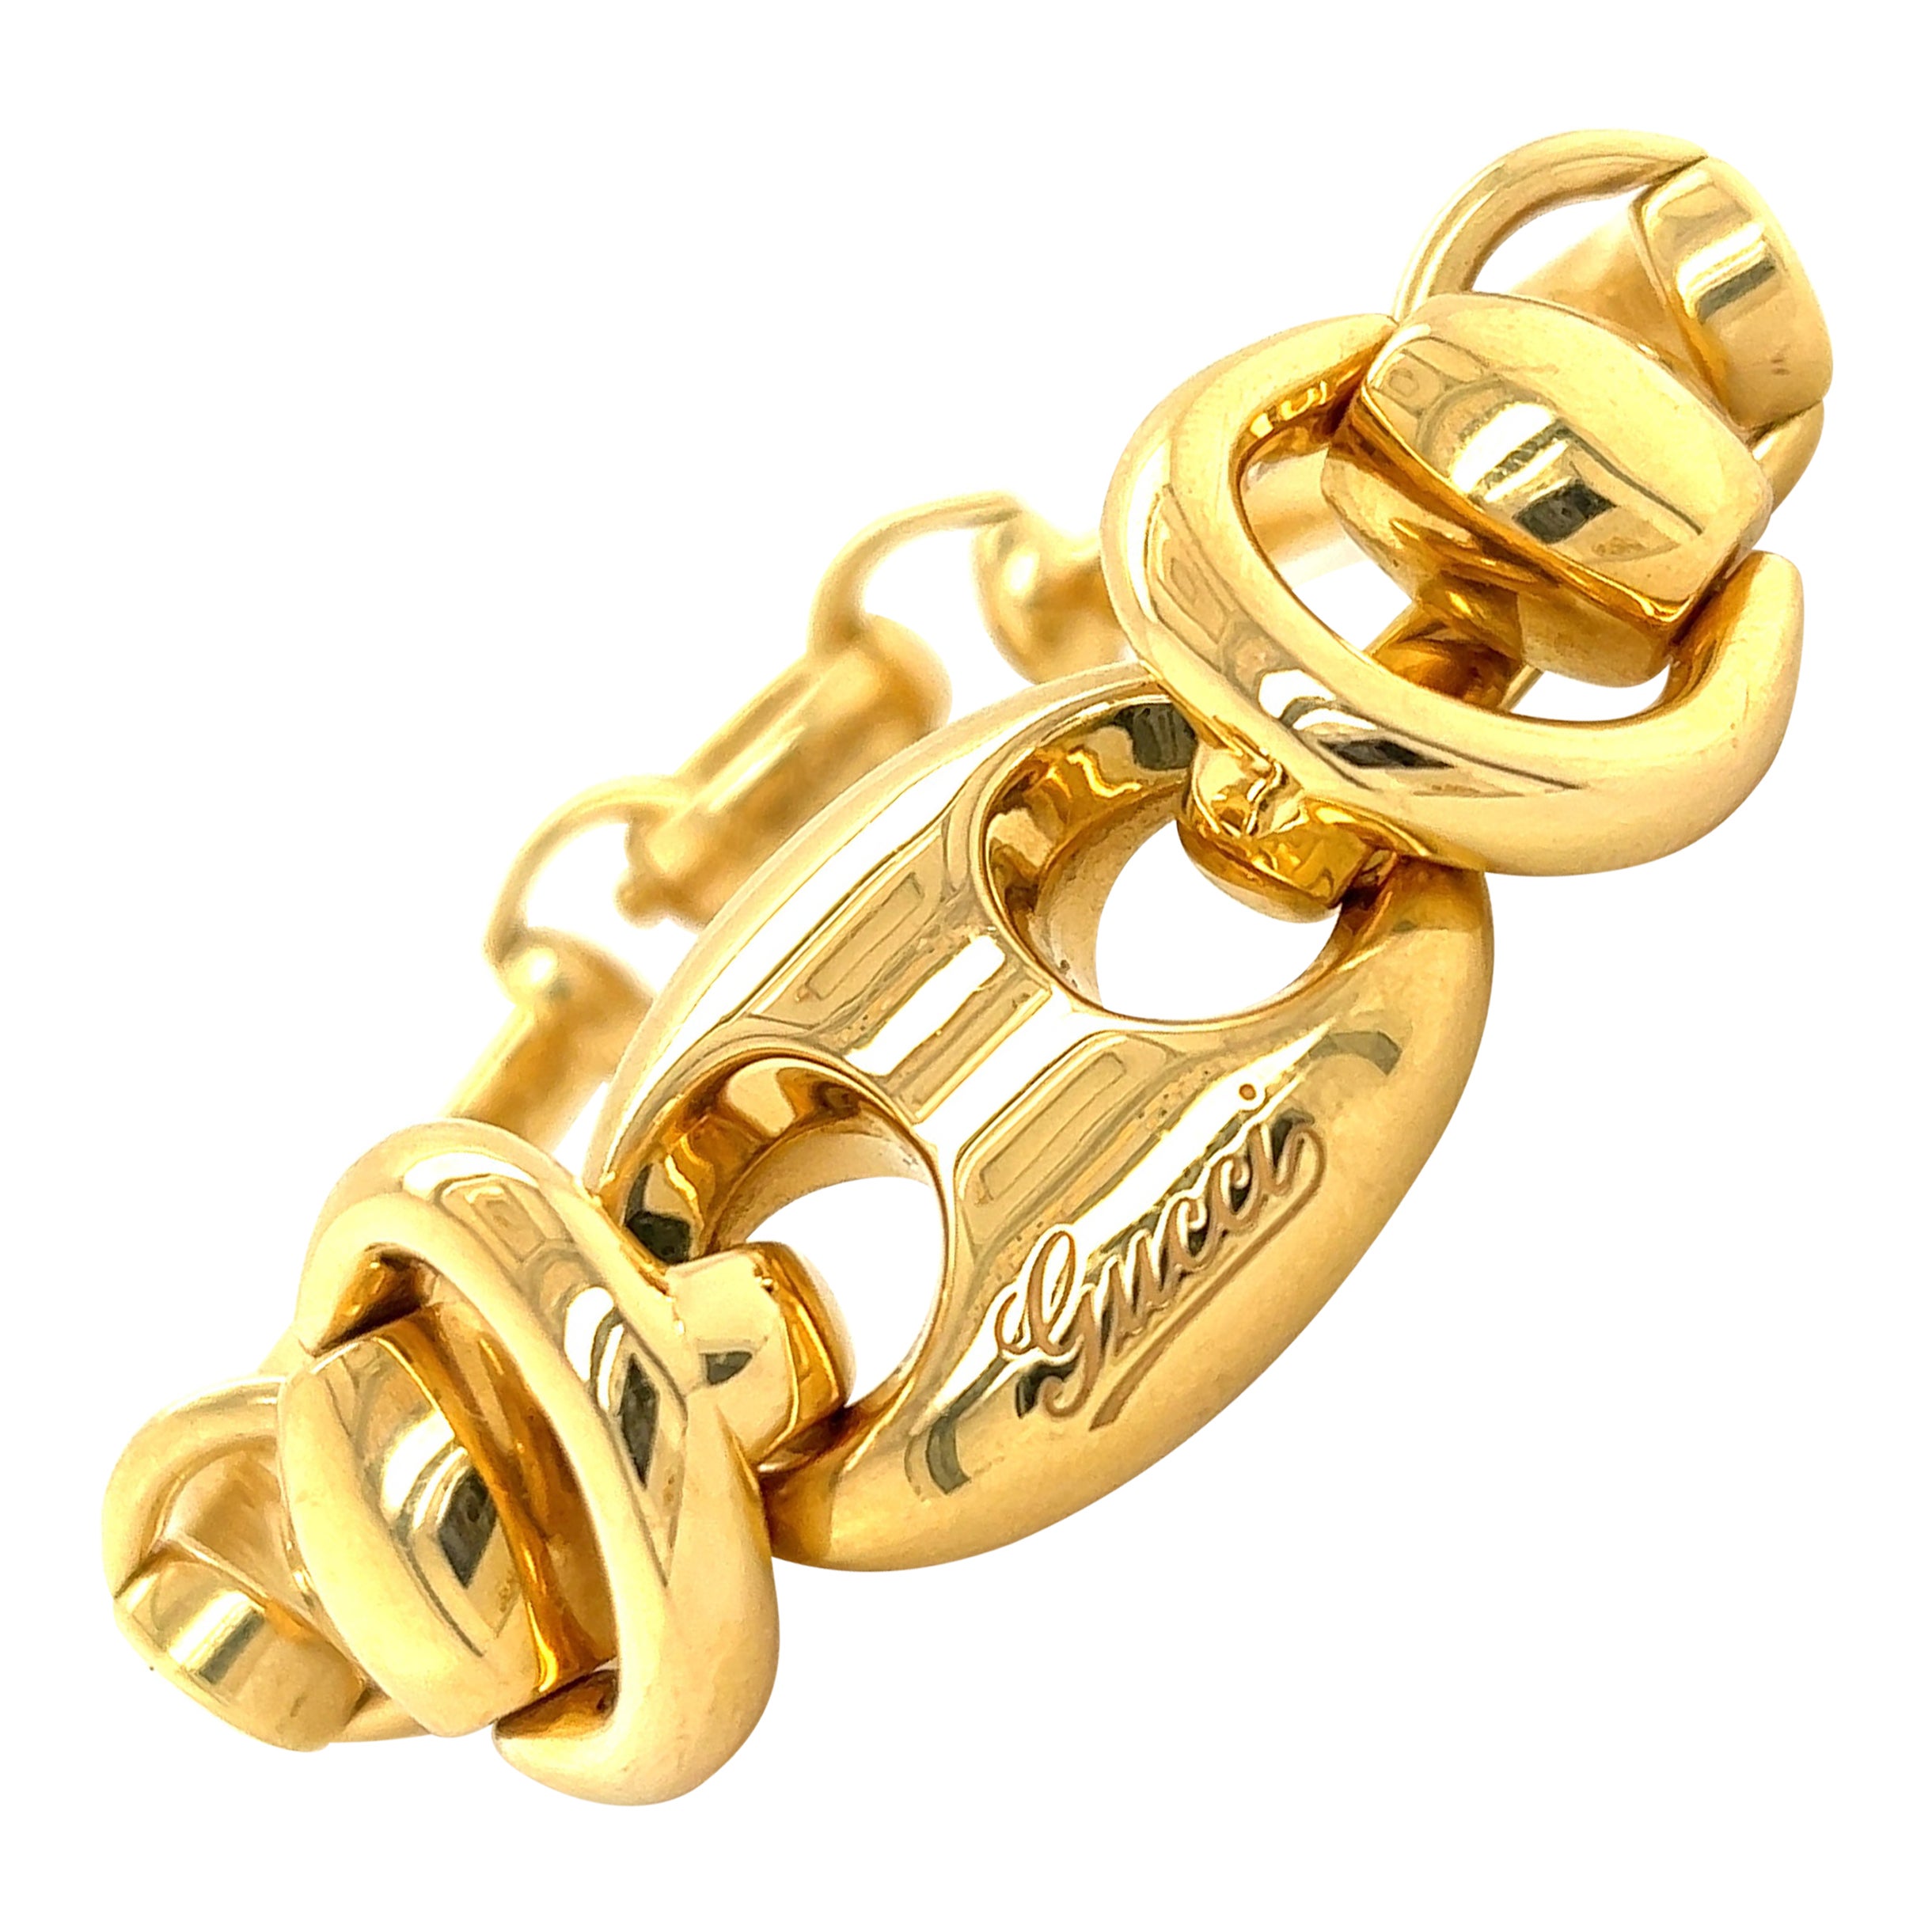 Gucci Horsebit Puff Link Bracelet in 18k Yellow Gold